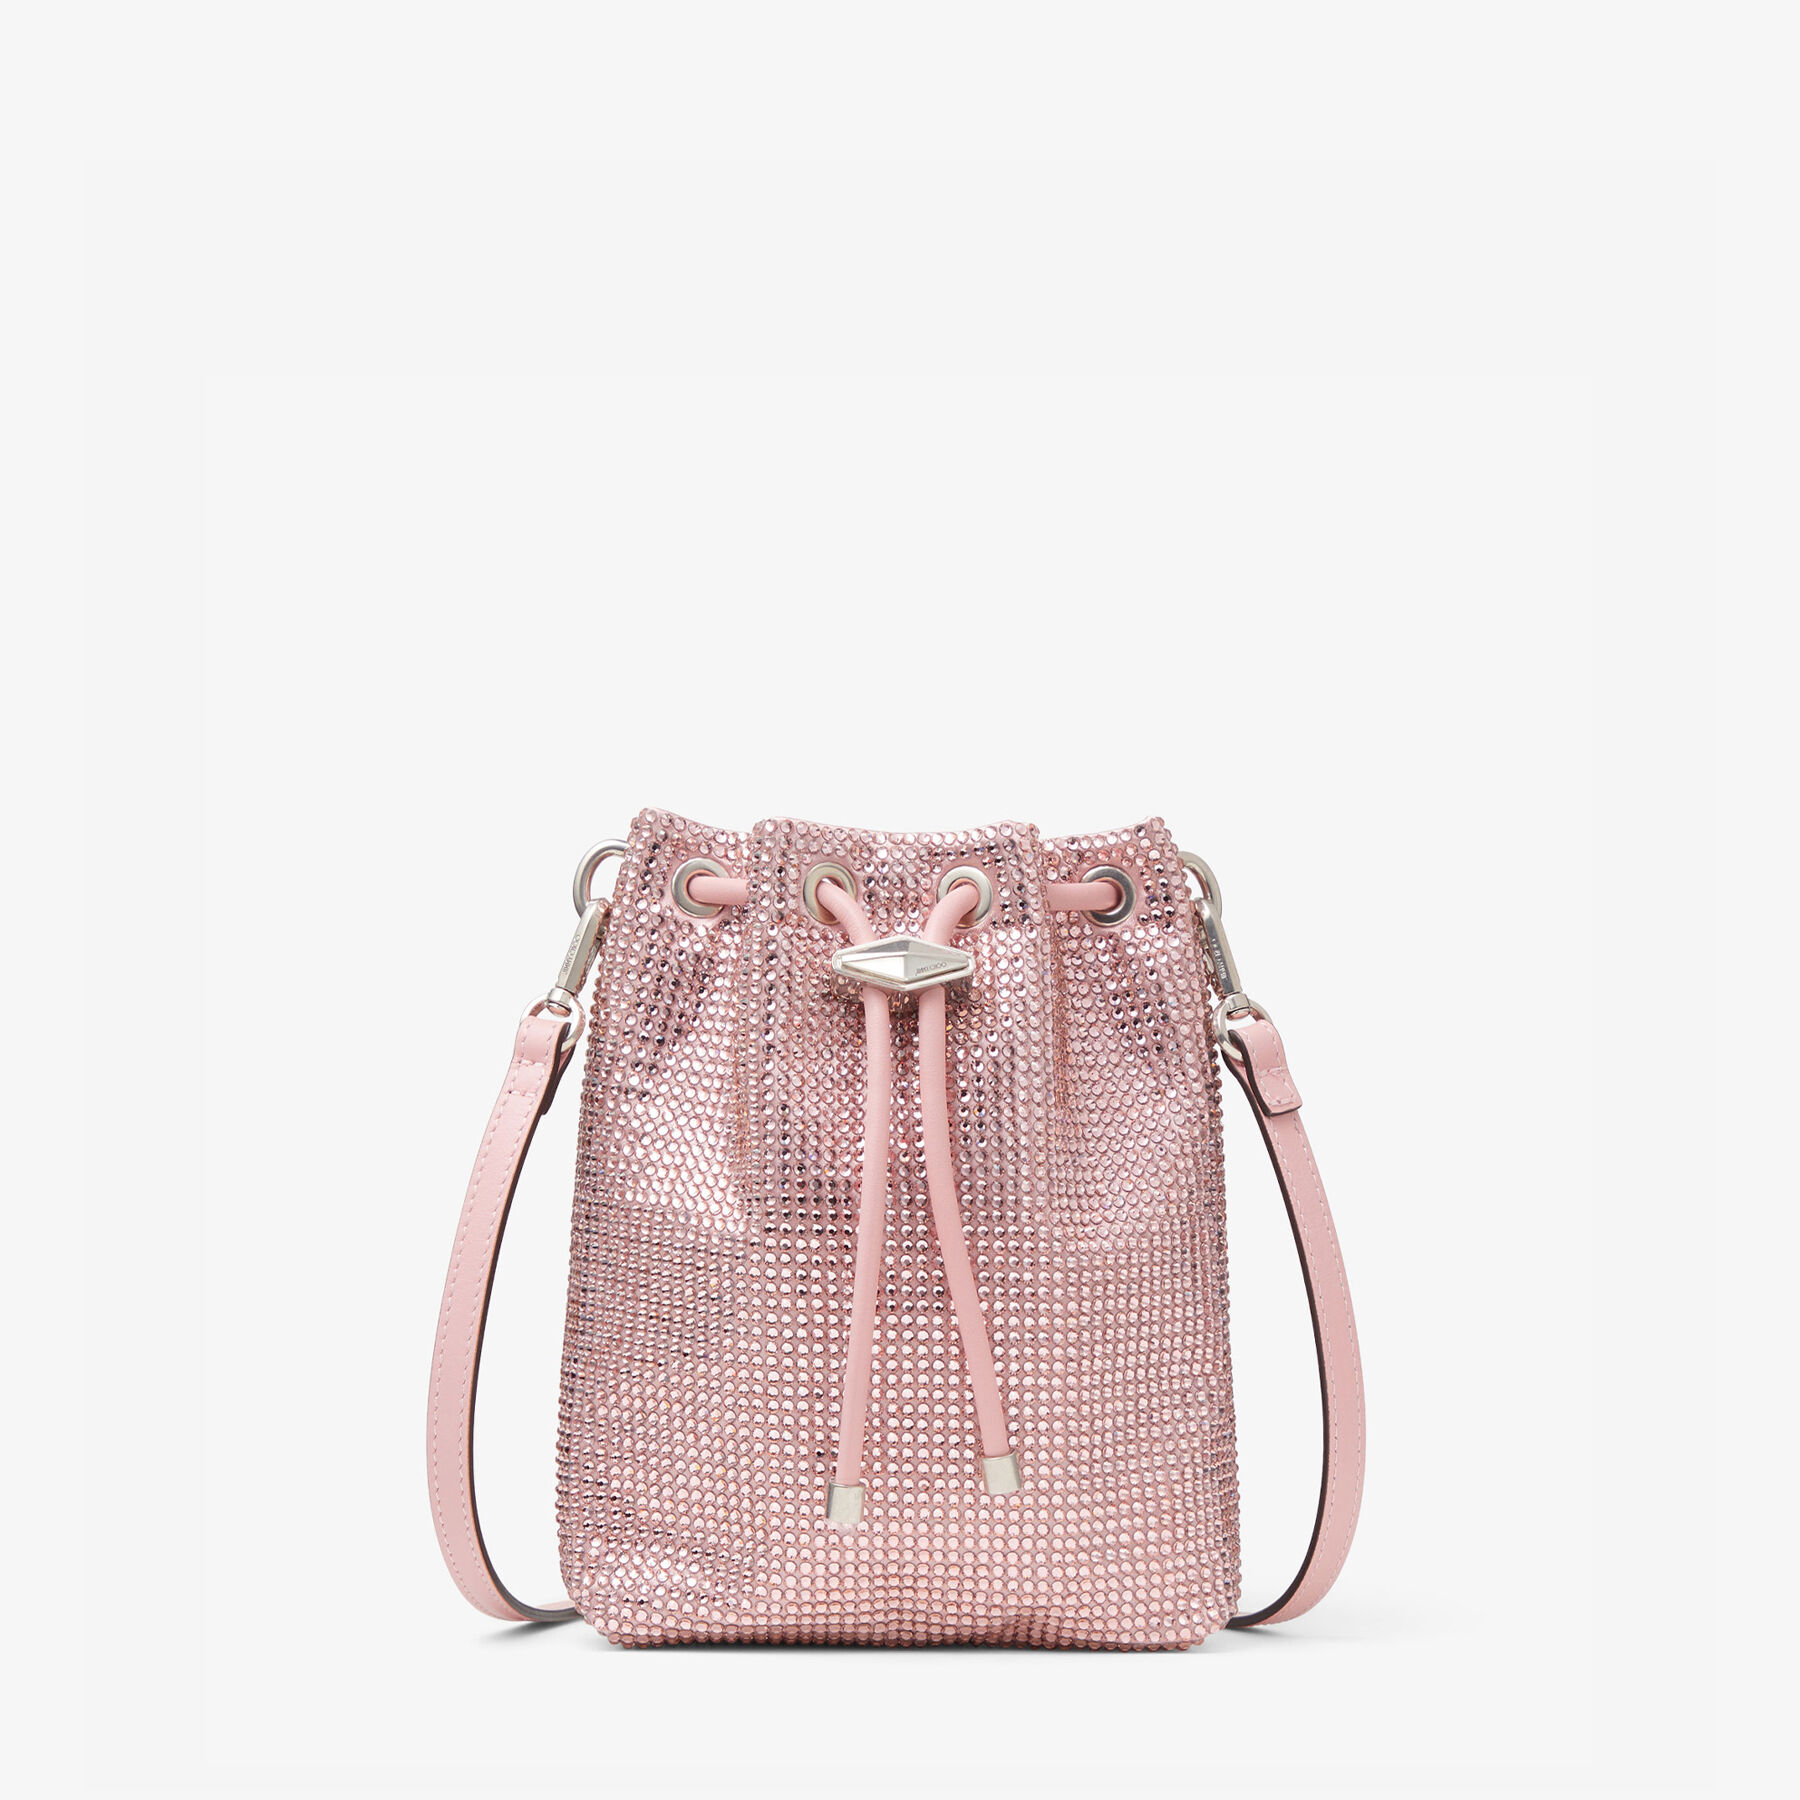 Cinch mini jimmy choo mini bag pink